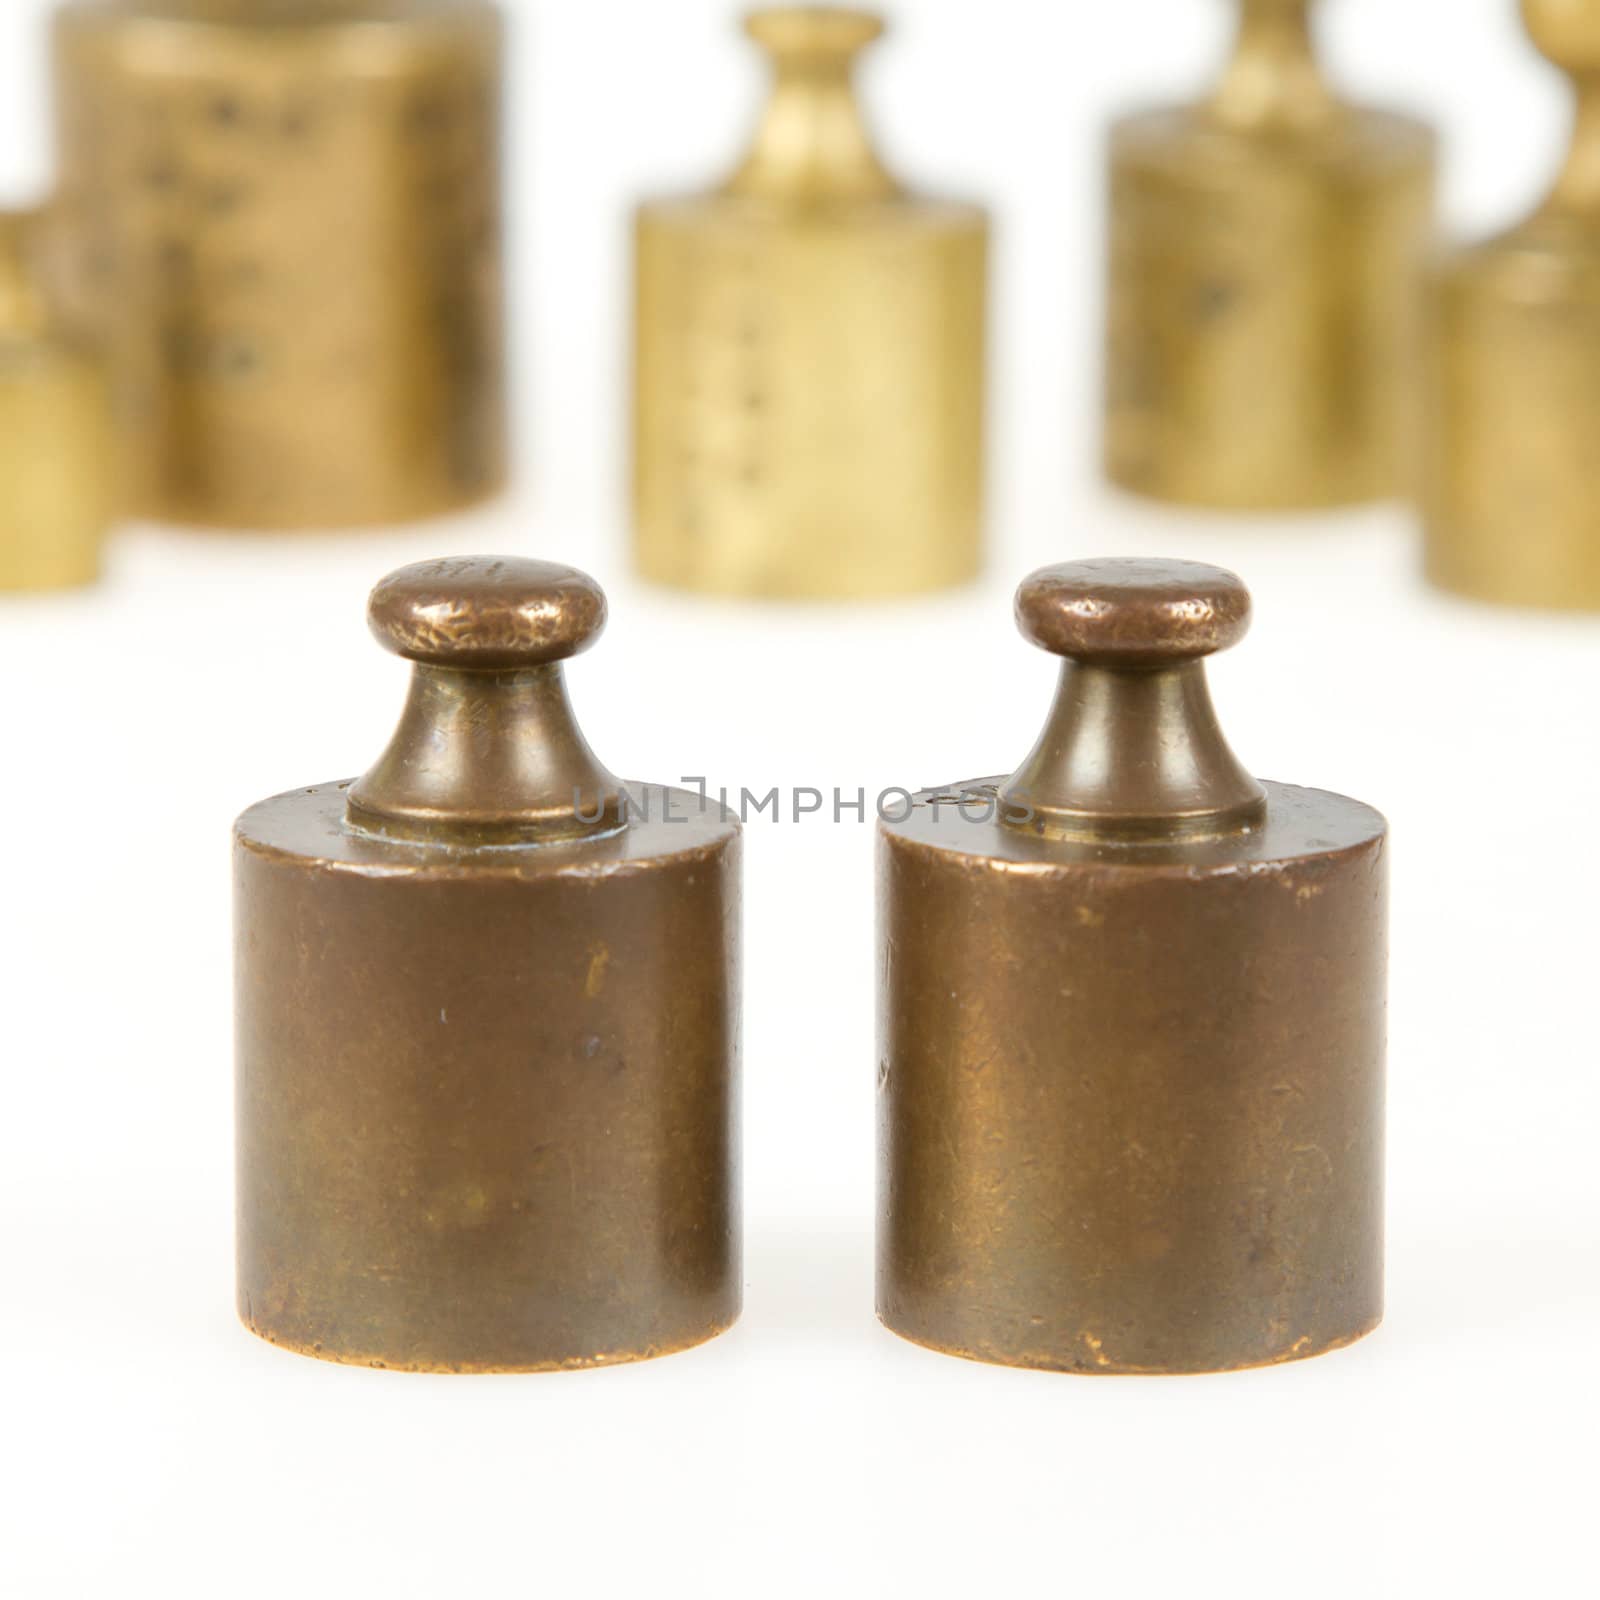 Old brass antique weights, Holland by michaklootwijk